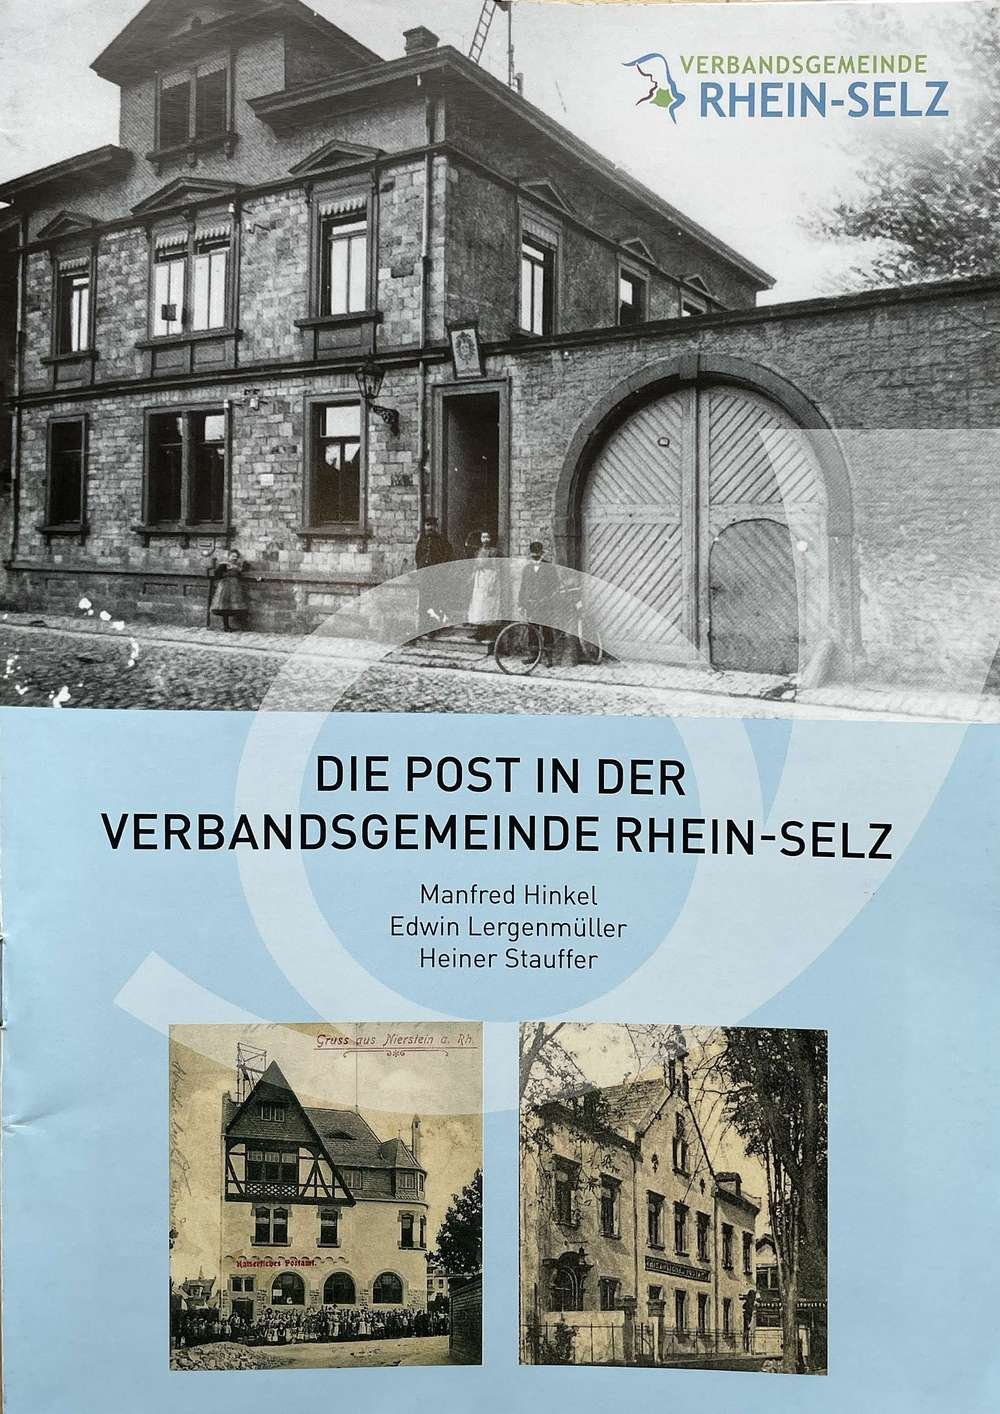 Die Post in der Verbandsgemeinde Rhein-Selz (Museum Guntersblum CC BY-NC-SA)